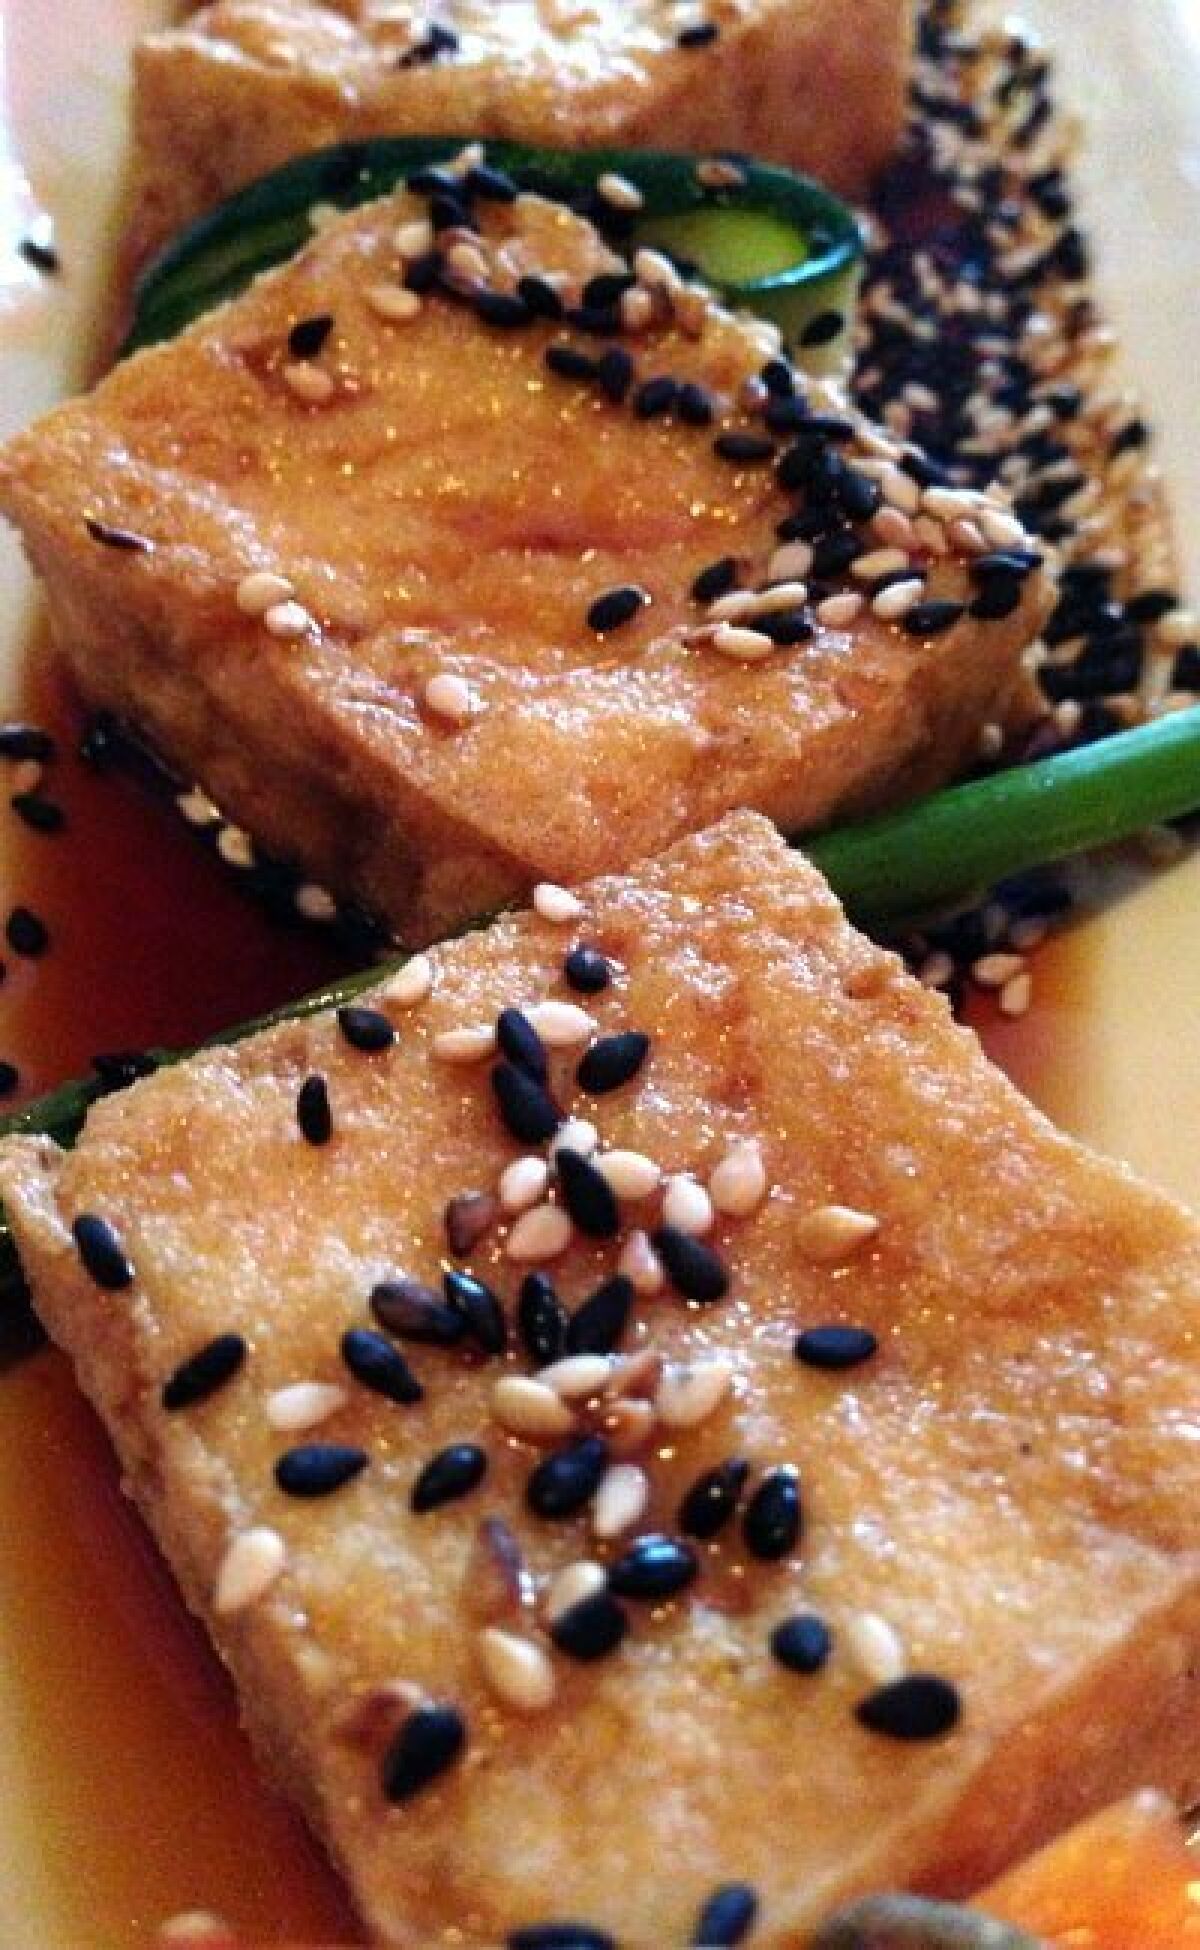 The tofu yakitori at Daofu, formerly Tao restaurant, in North Park.